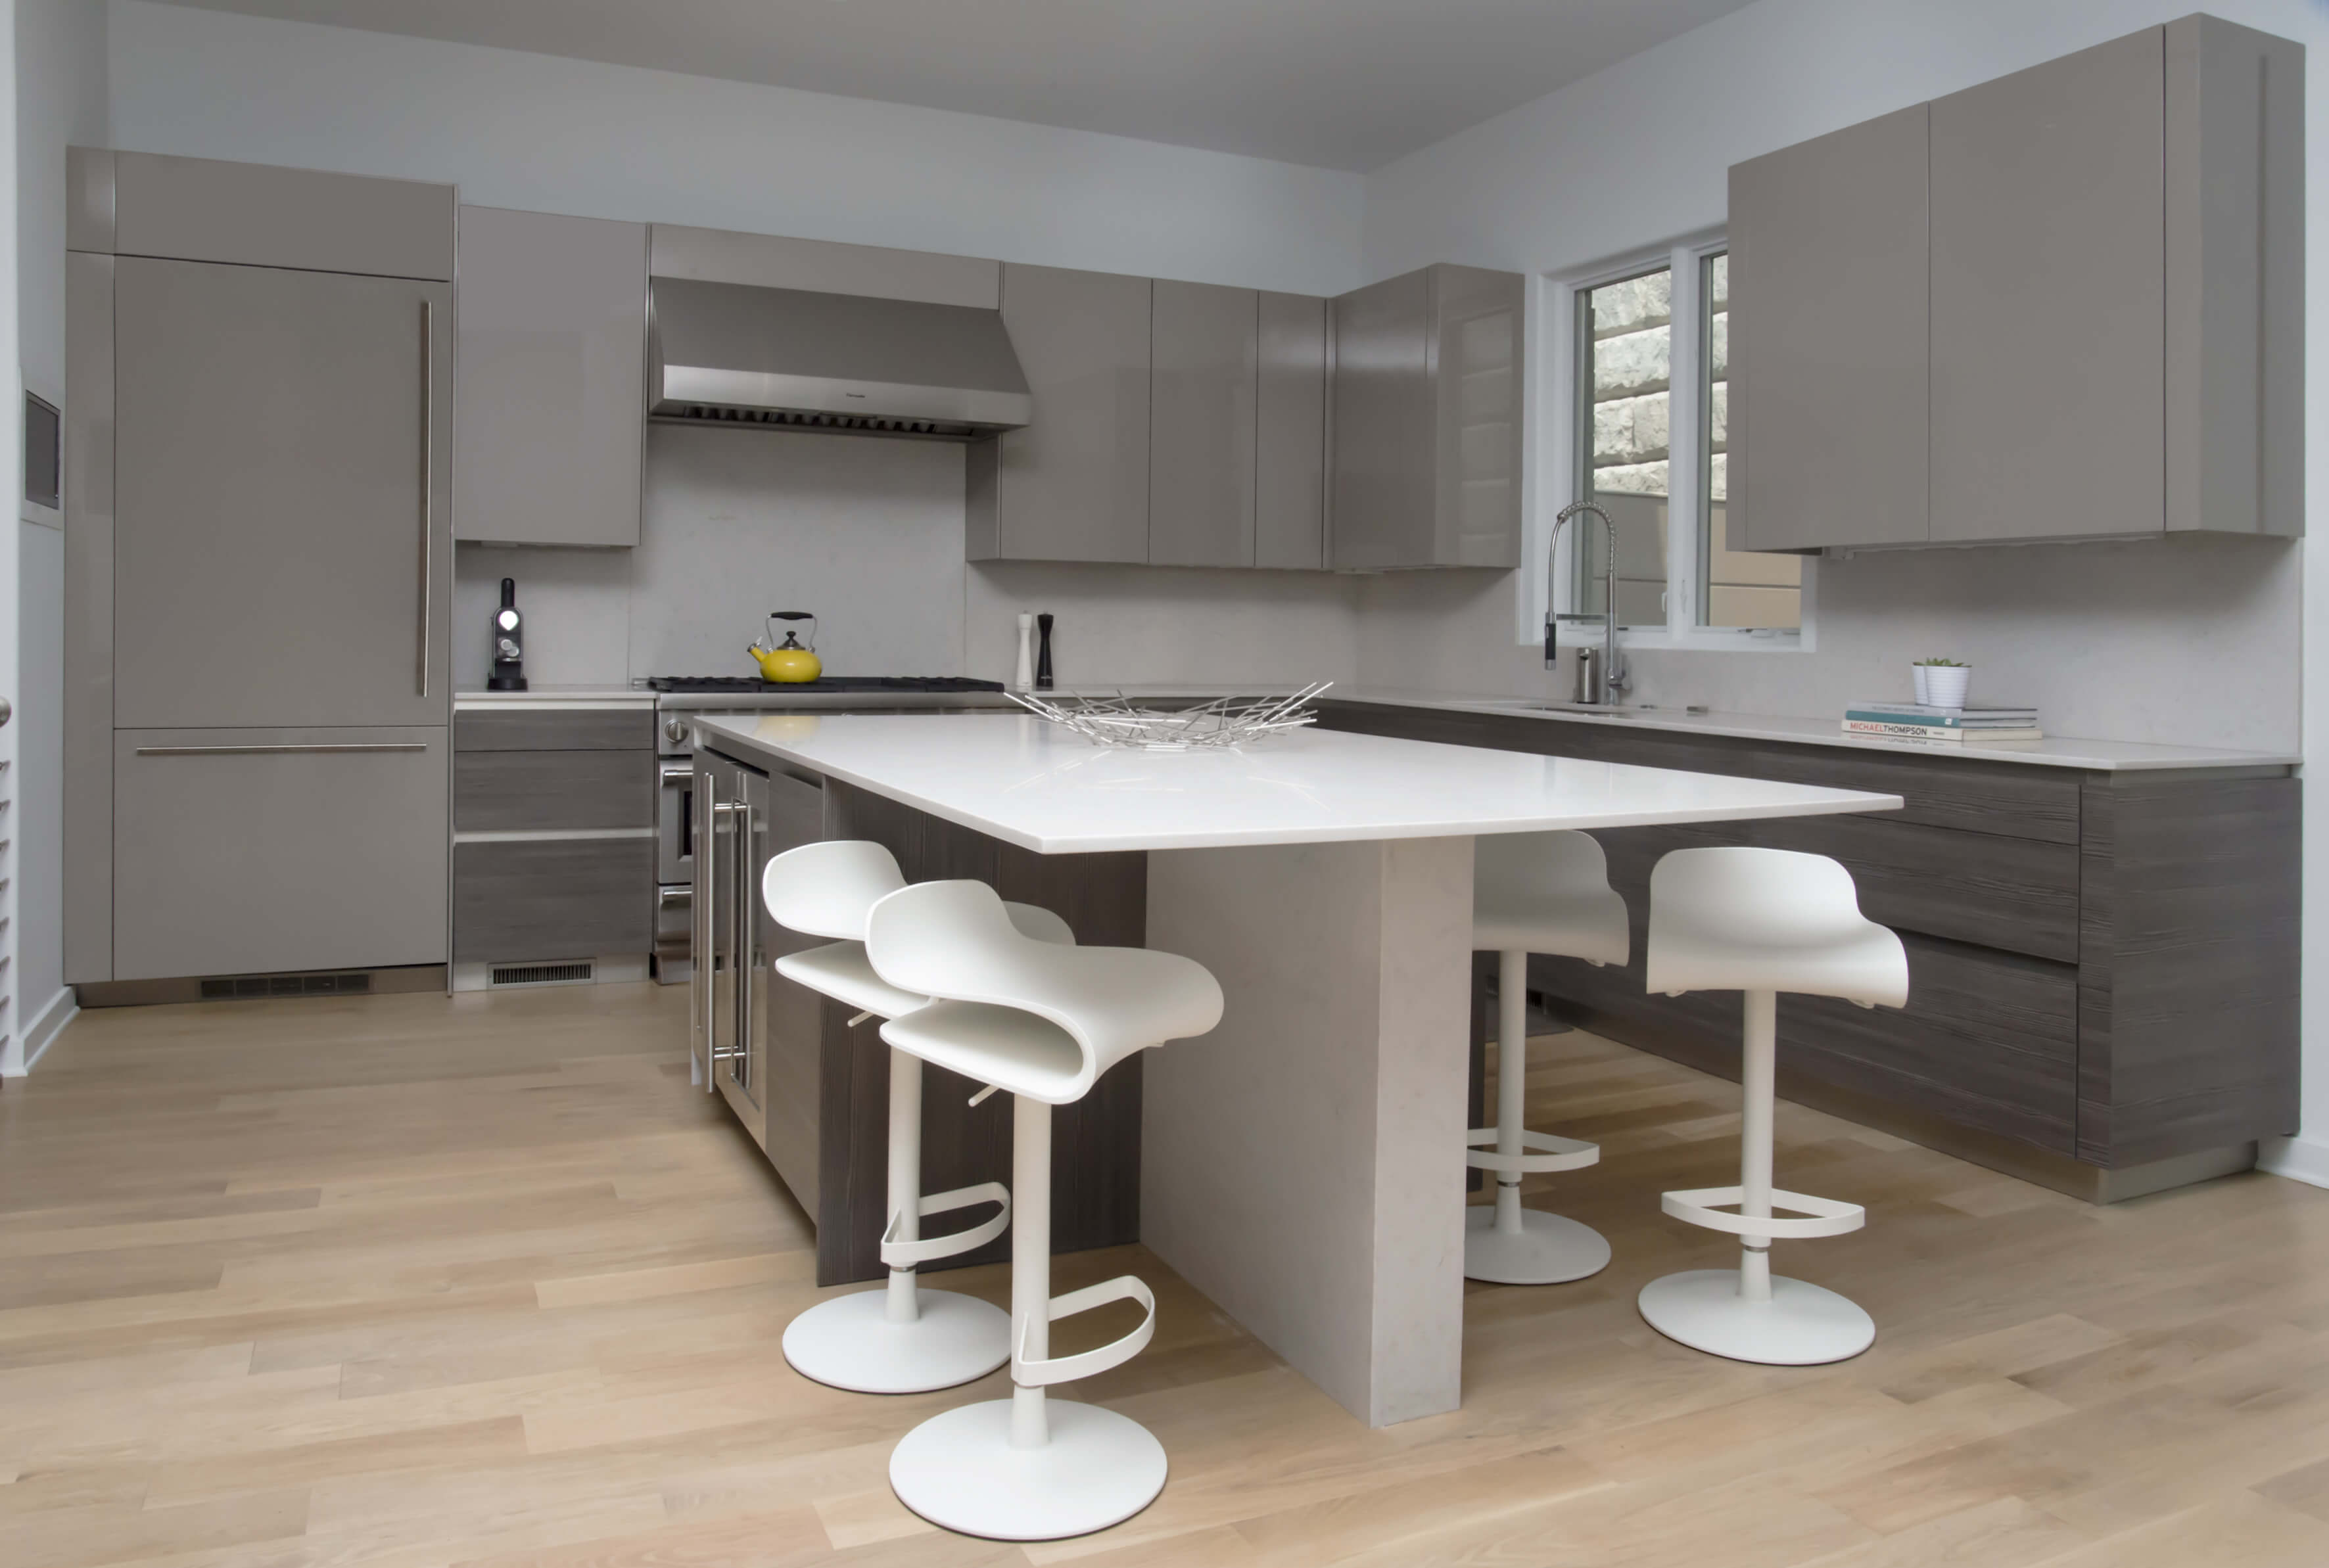 Modern and contemporary kitchen design by interior designer Renan Menninger of RM Interiors in Cincinnati.